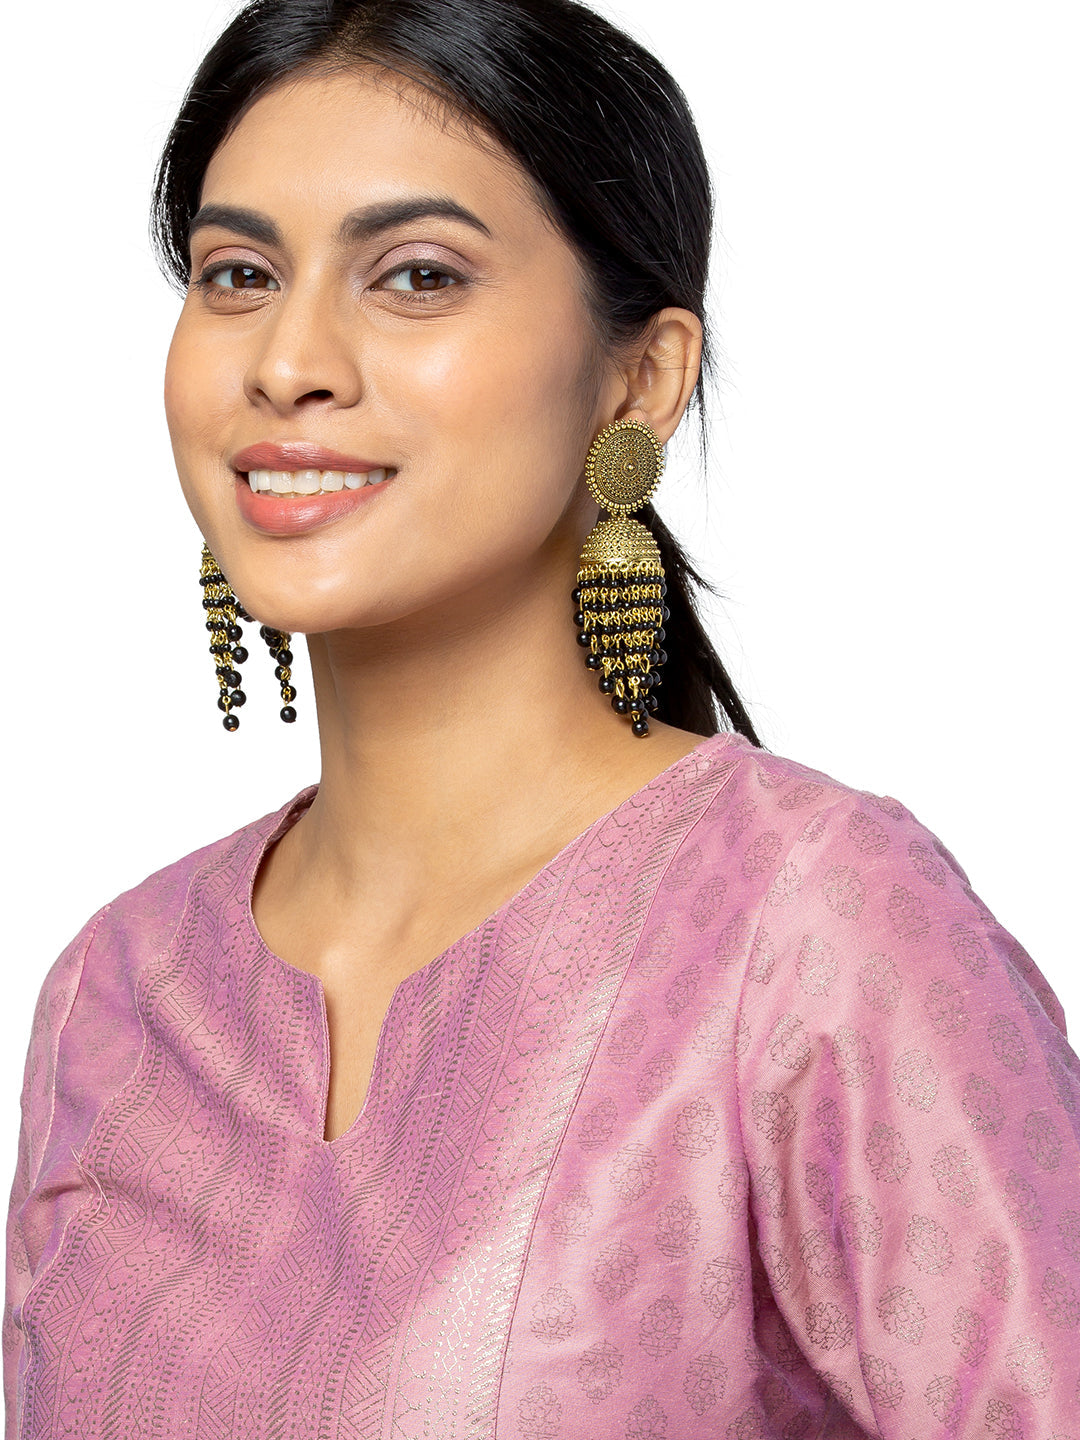 Buy Zehra Silver Tone Peacock Chandbali Earrings (Pink) at Amazon.in